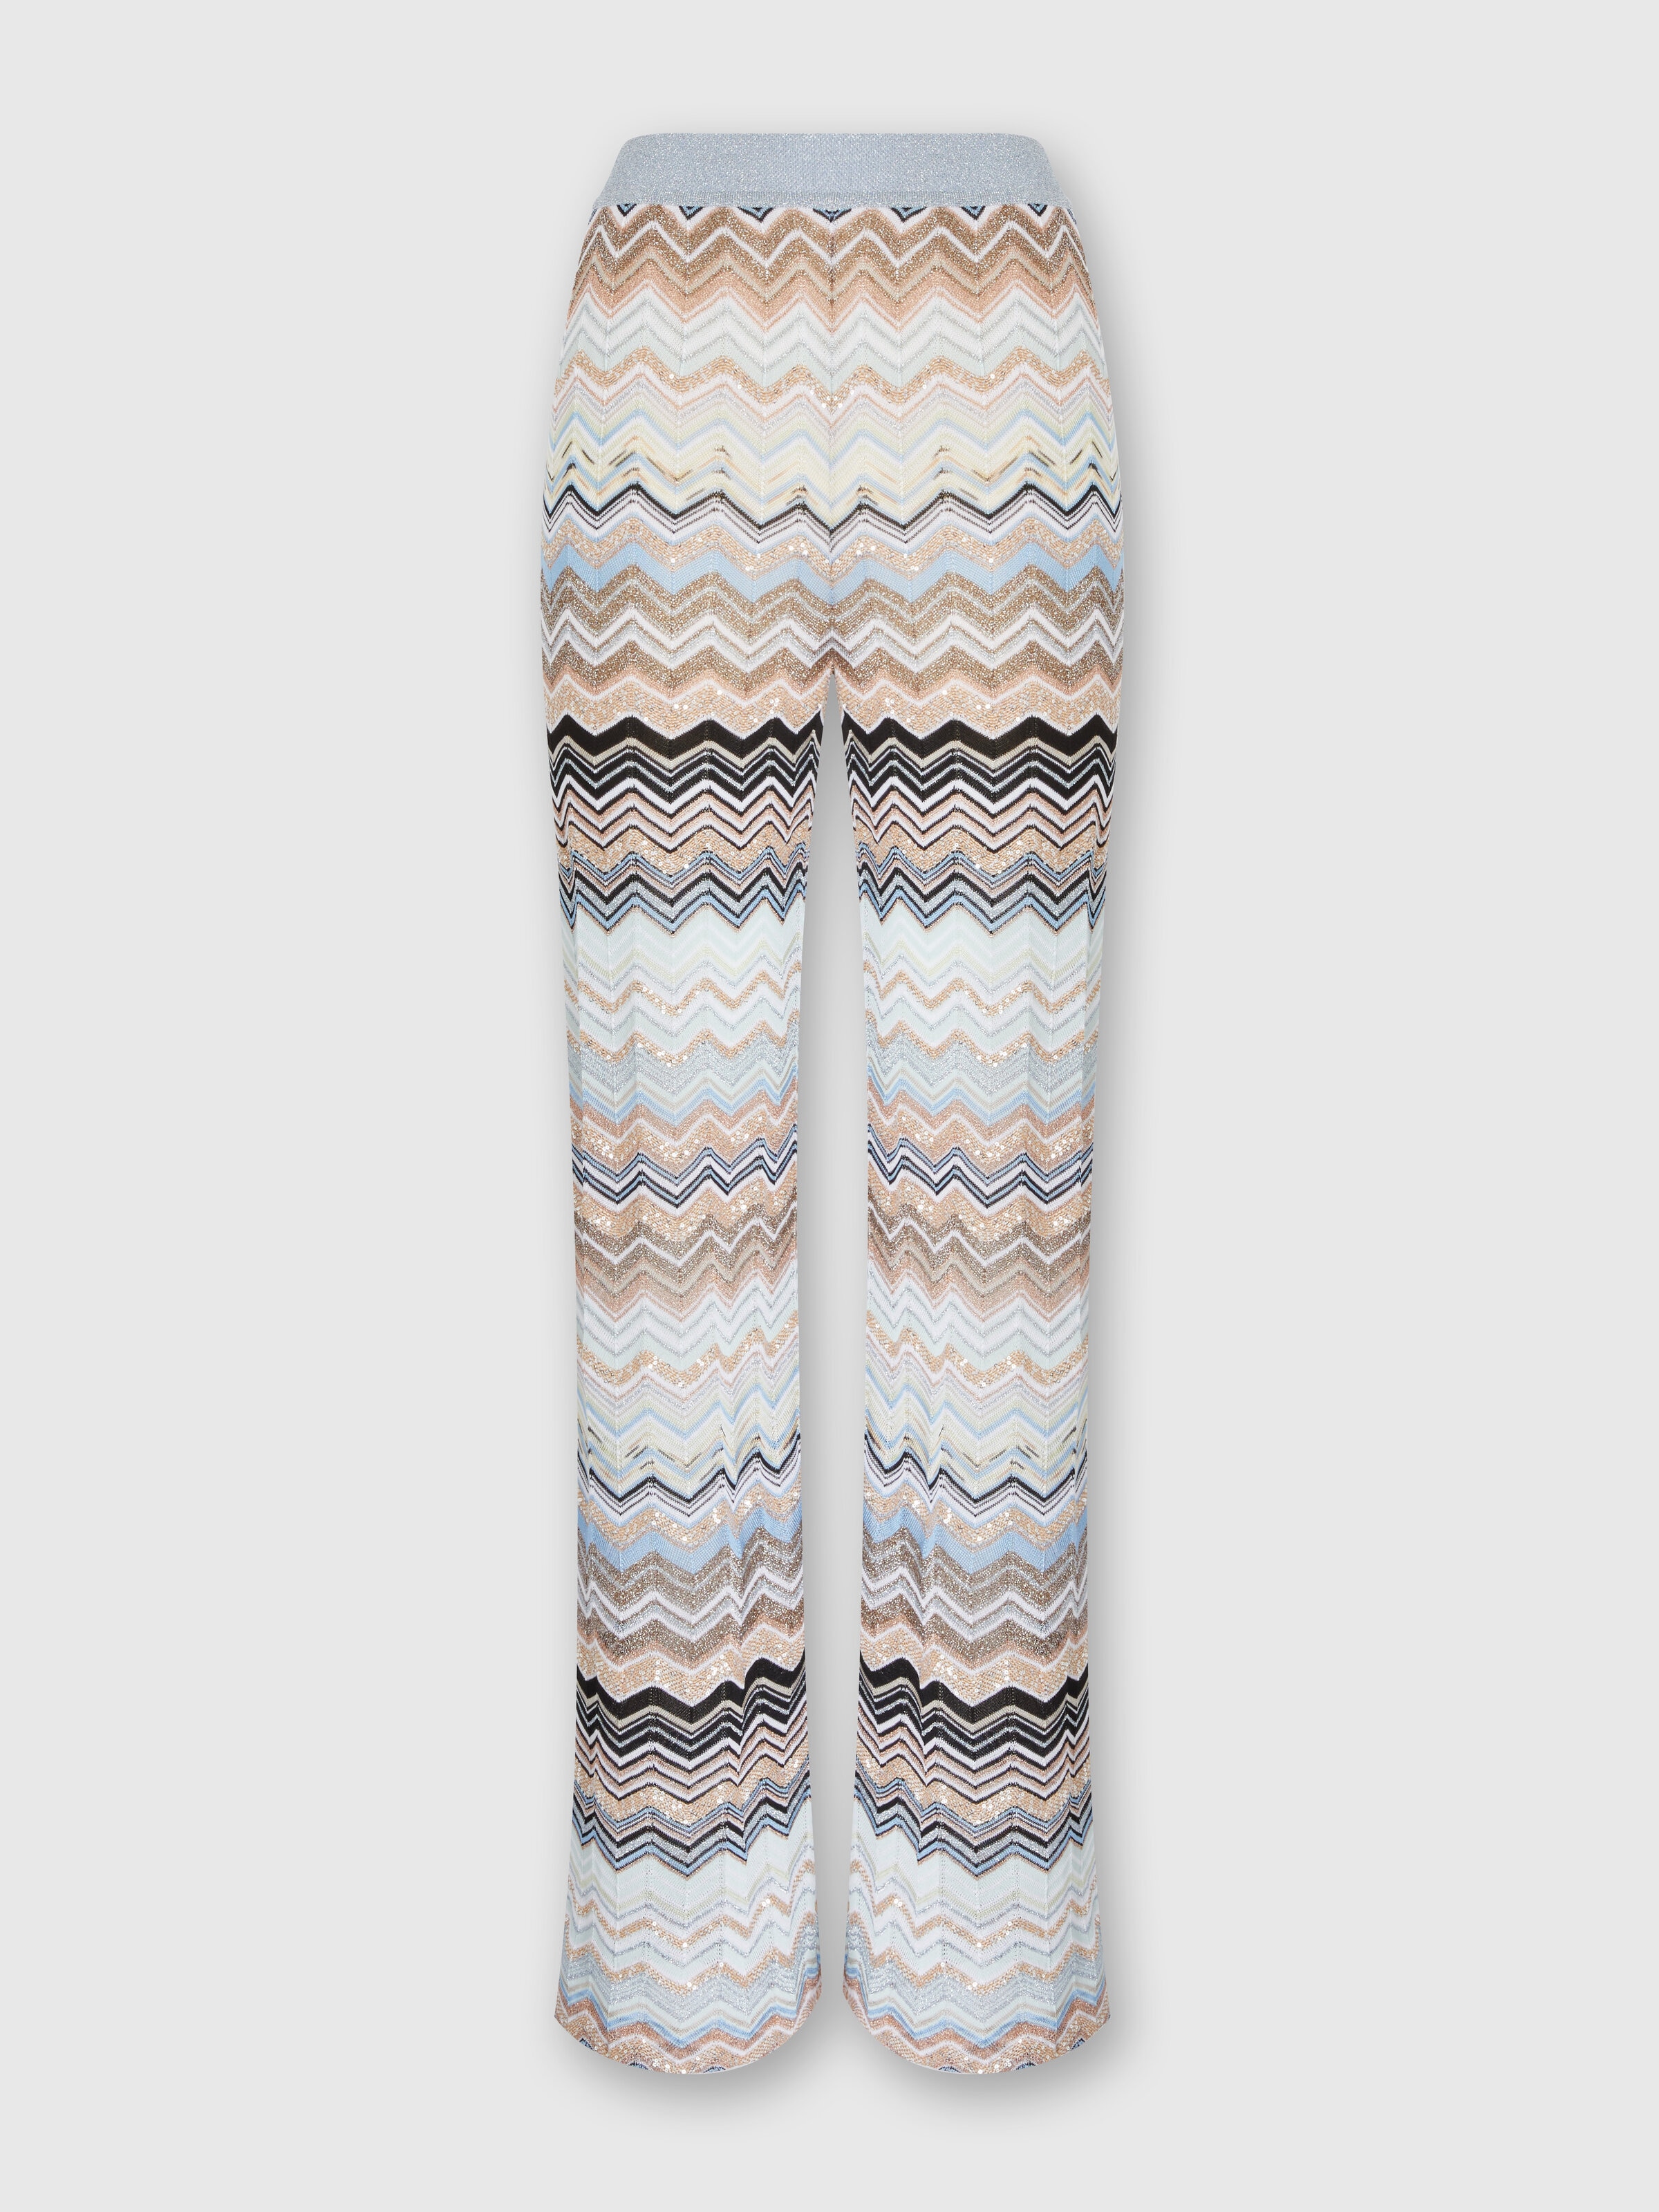 Chevron lamé knit trousers with sequins, Multicoloured  - 0